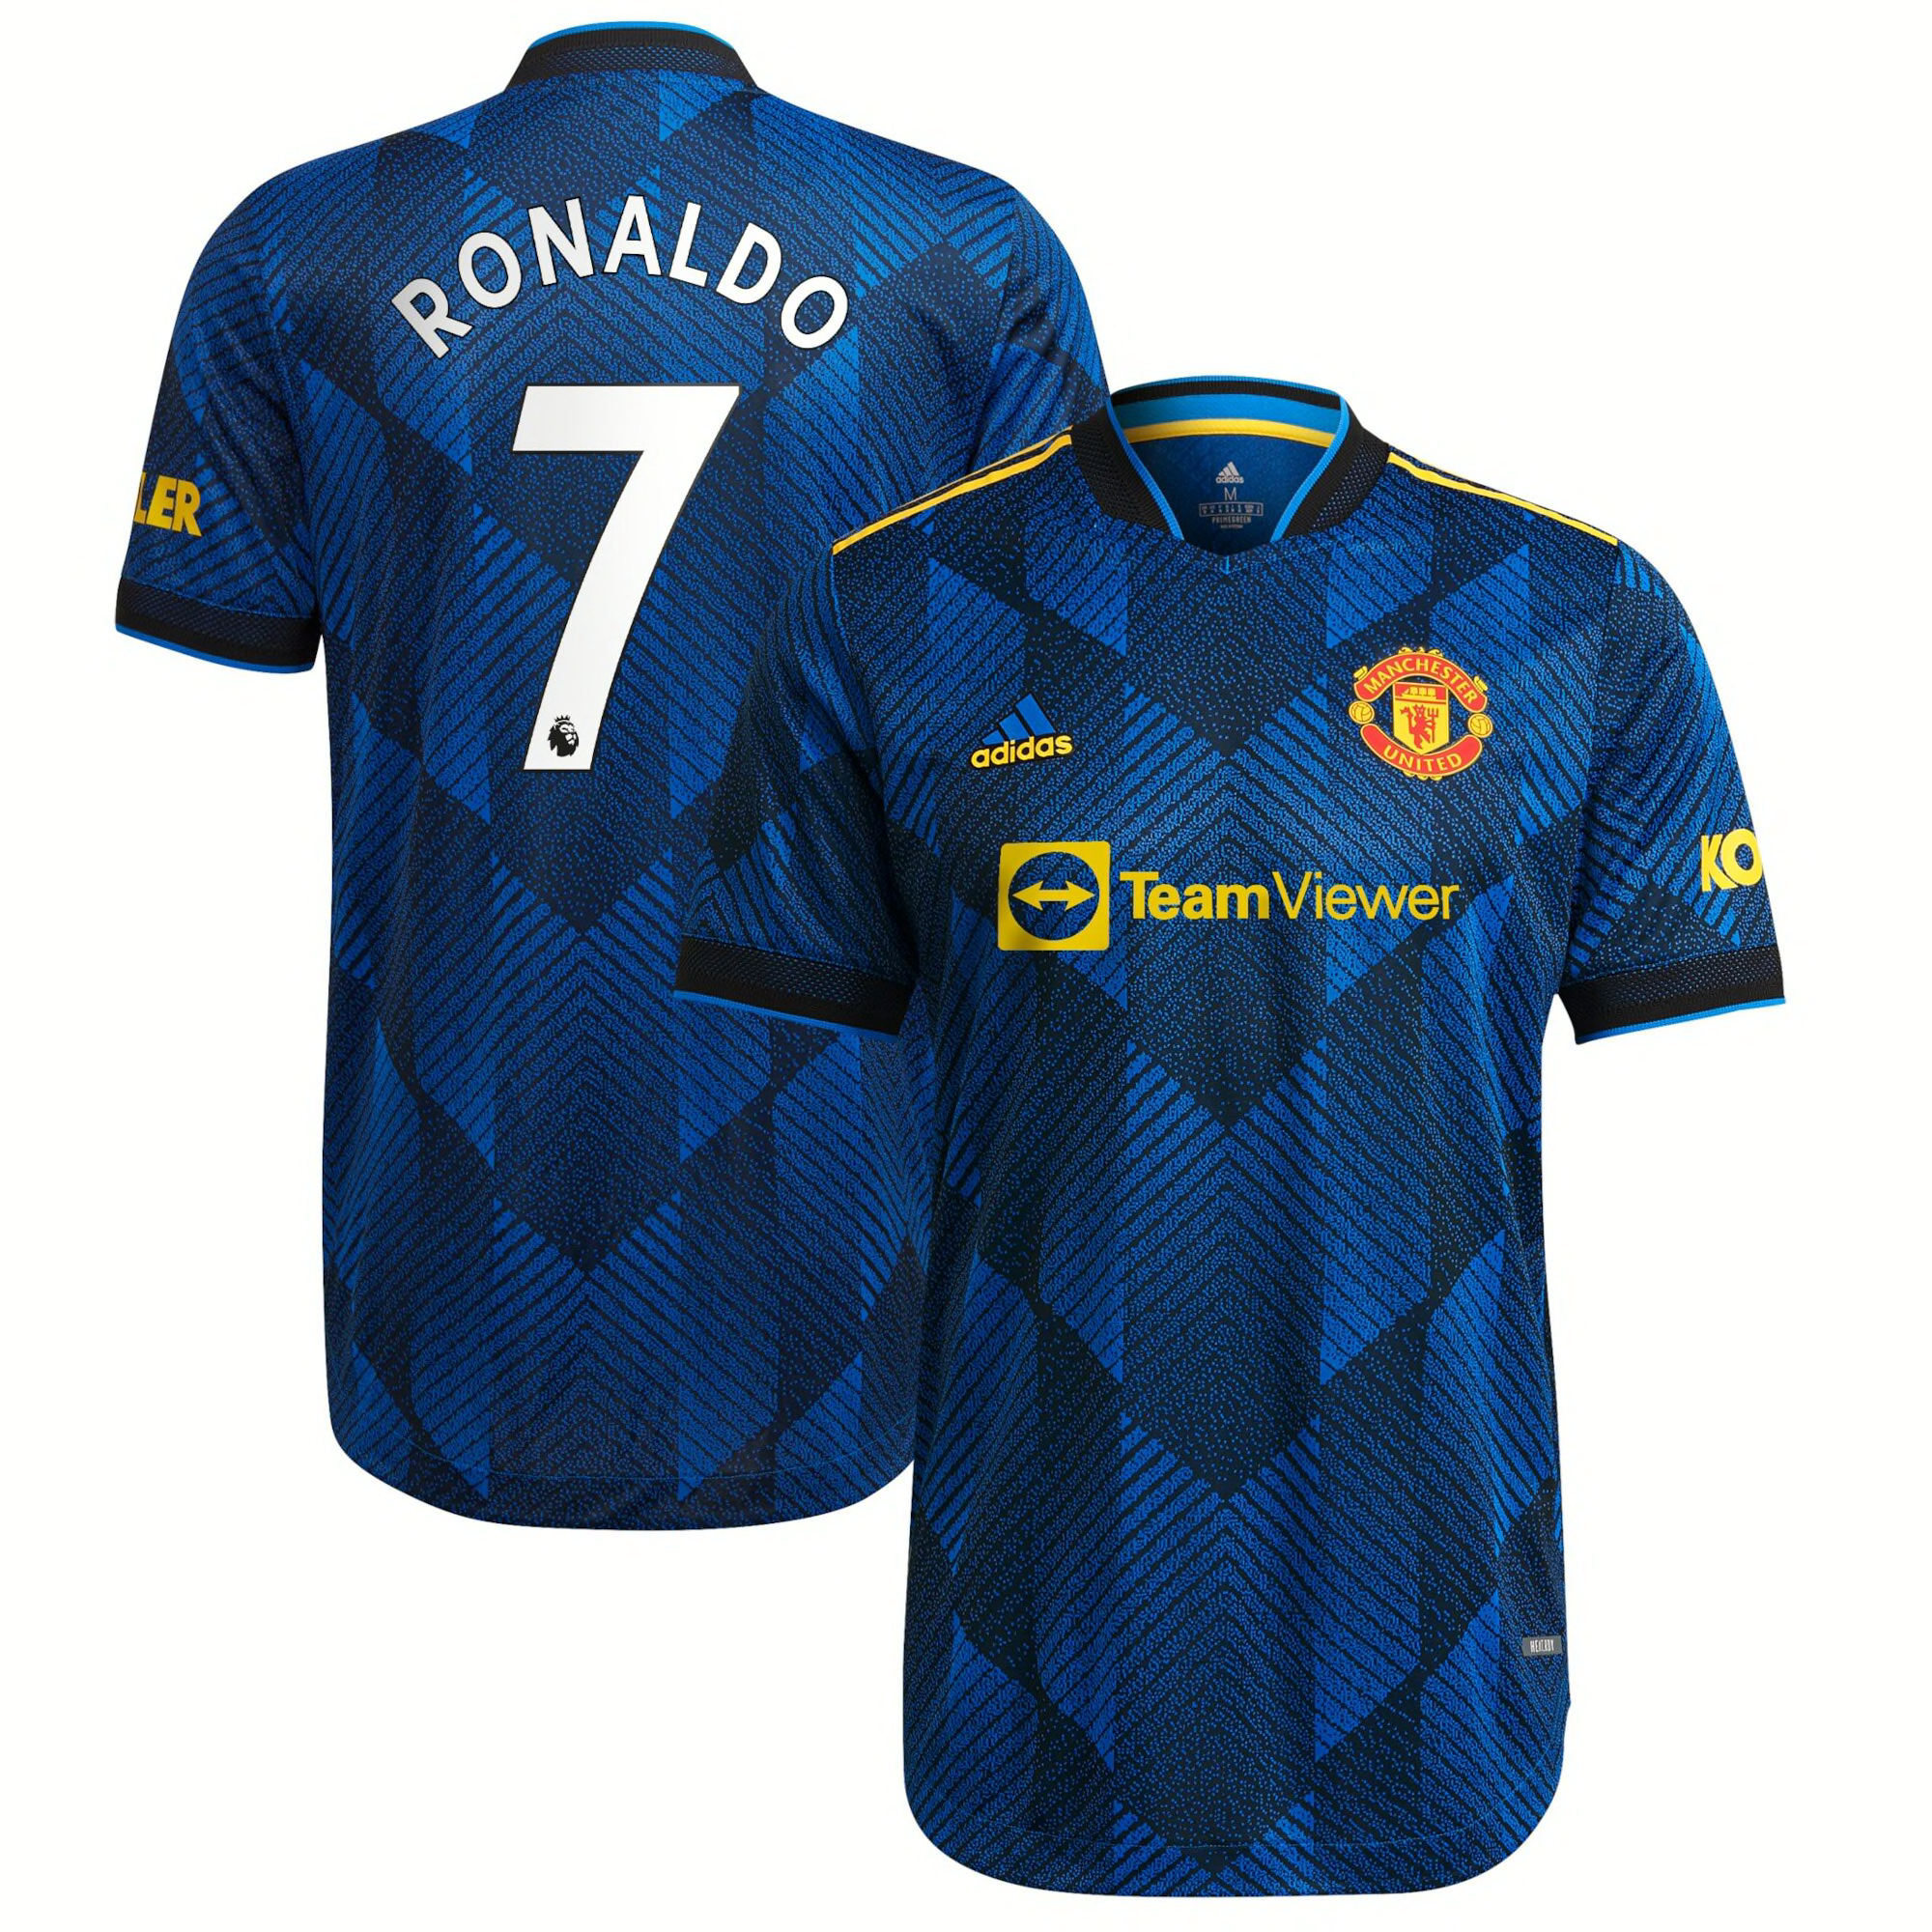 2021/22 adidas Cristiano Ronaldo Manchester United Home Jersey